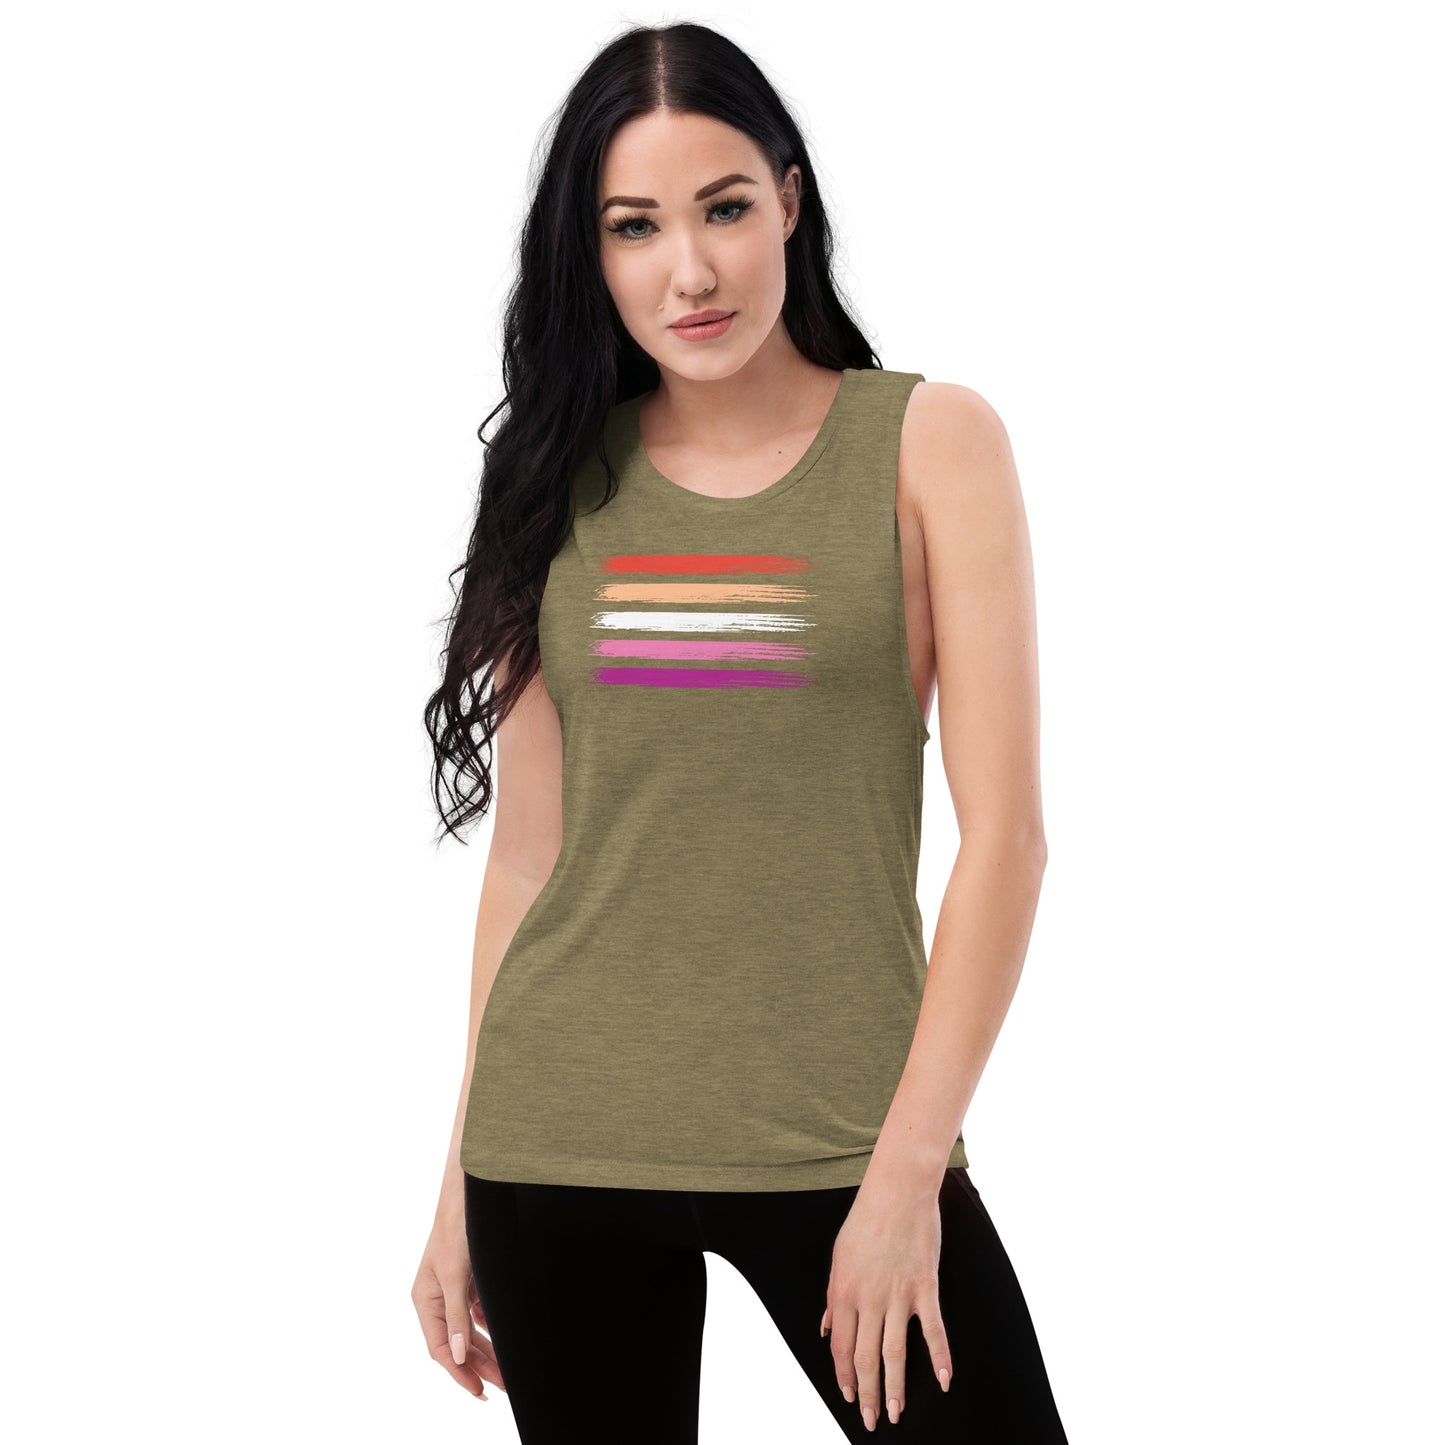 Lesbian Pride Flag muscle tank (women's sizes)